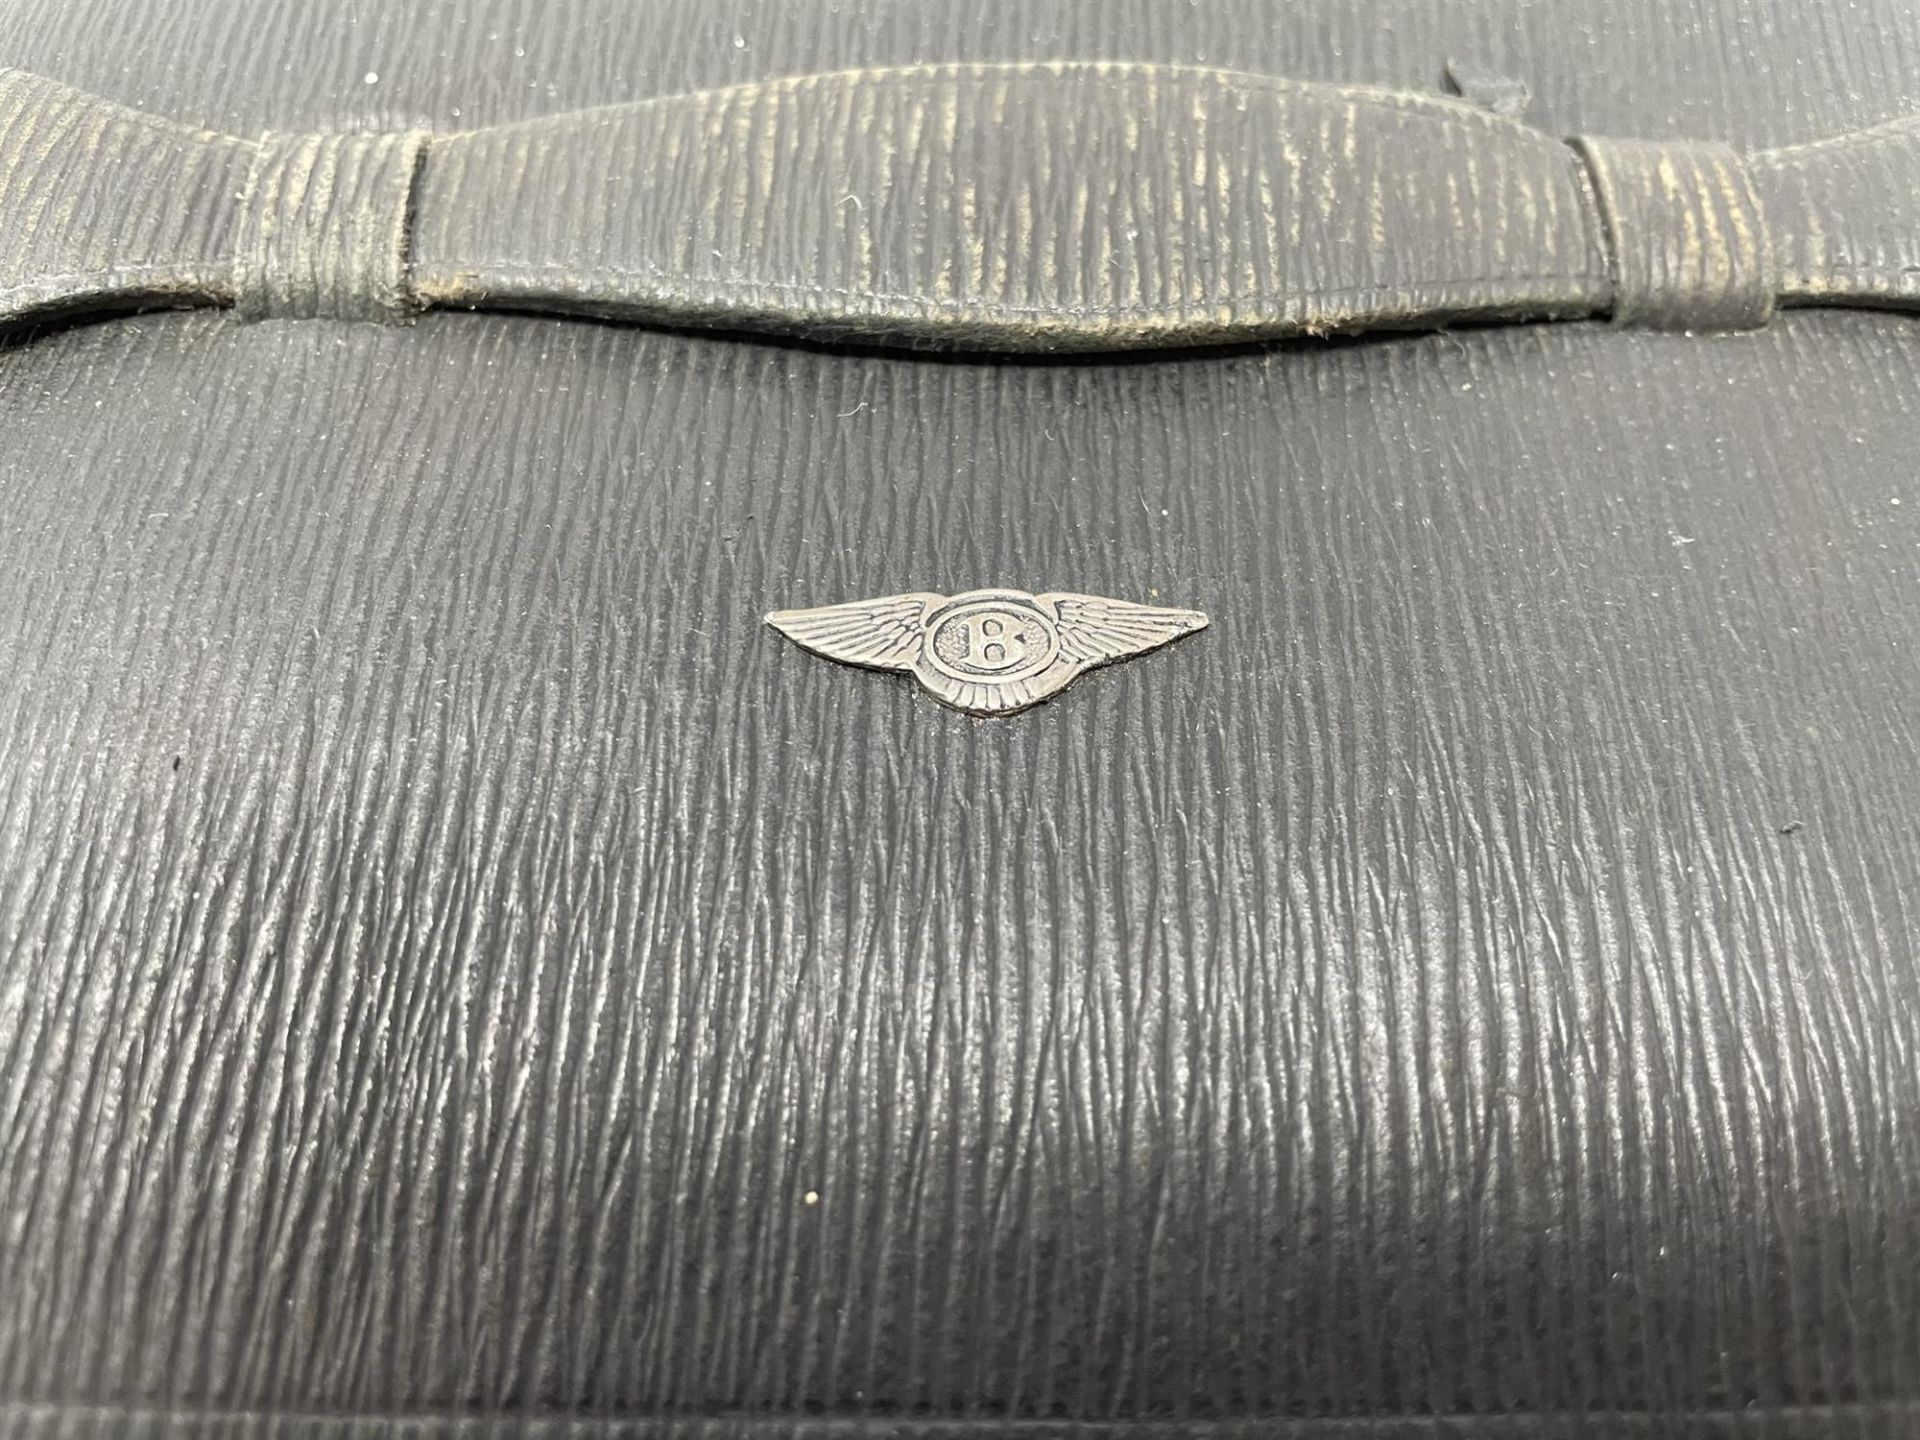 A Gentleman’s Travelling Grooming Set, marked "Bentley", c1920s* - Image 6 of 7